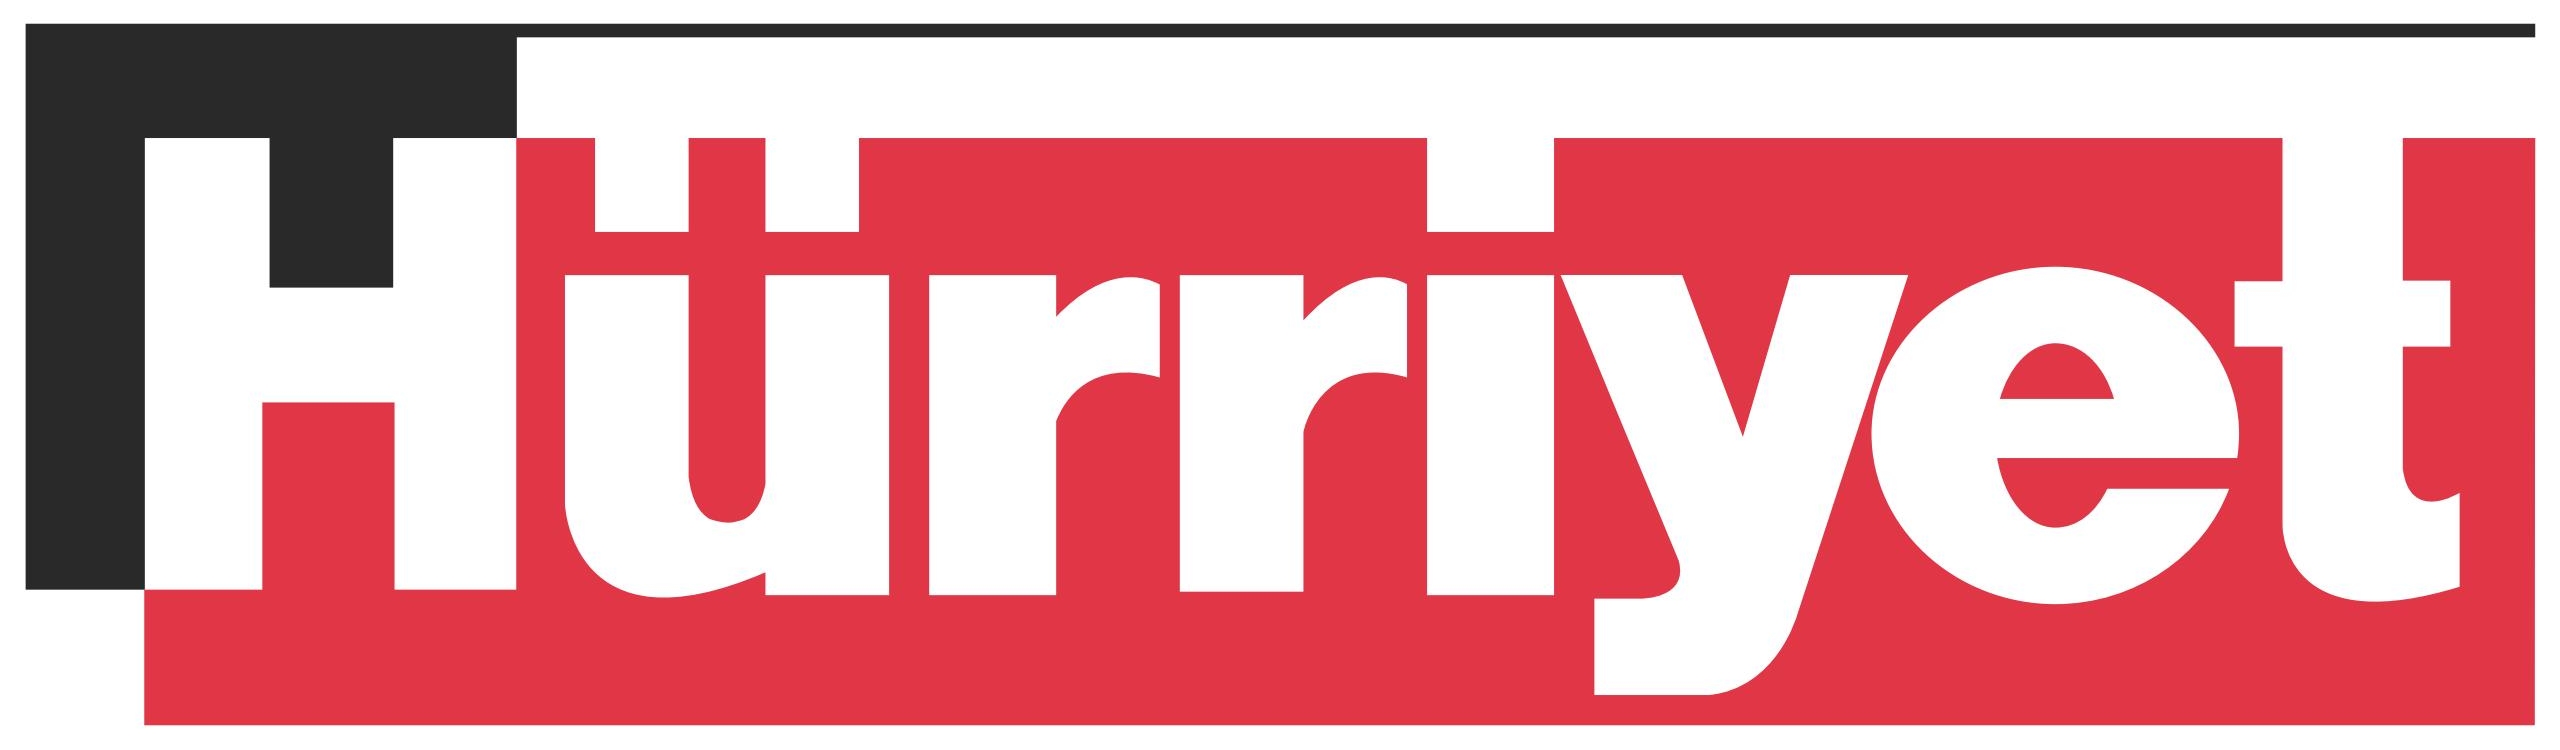 Hürriyet Brand Logo